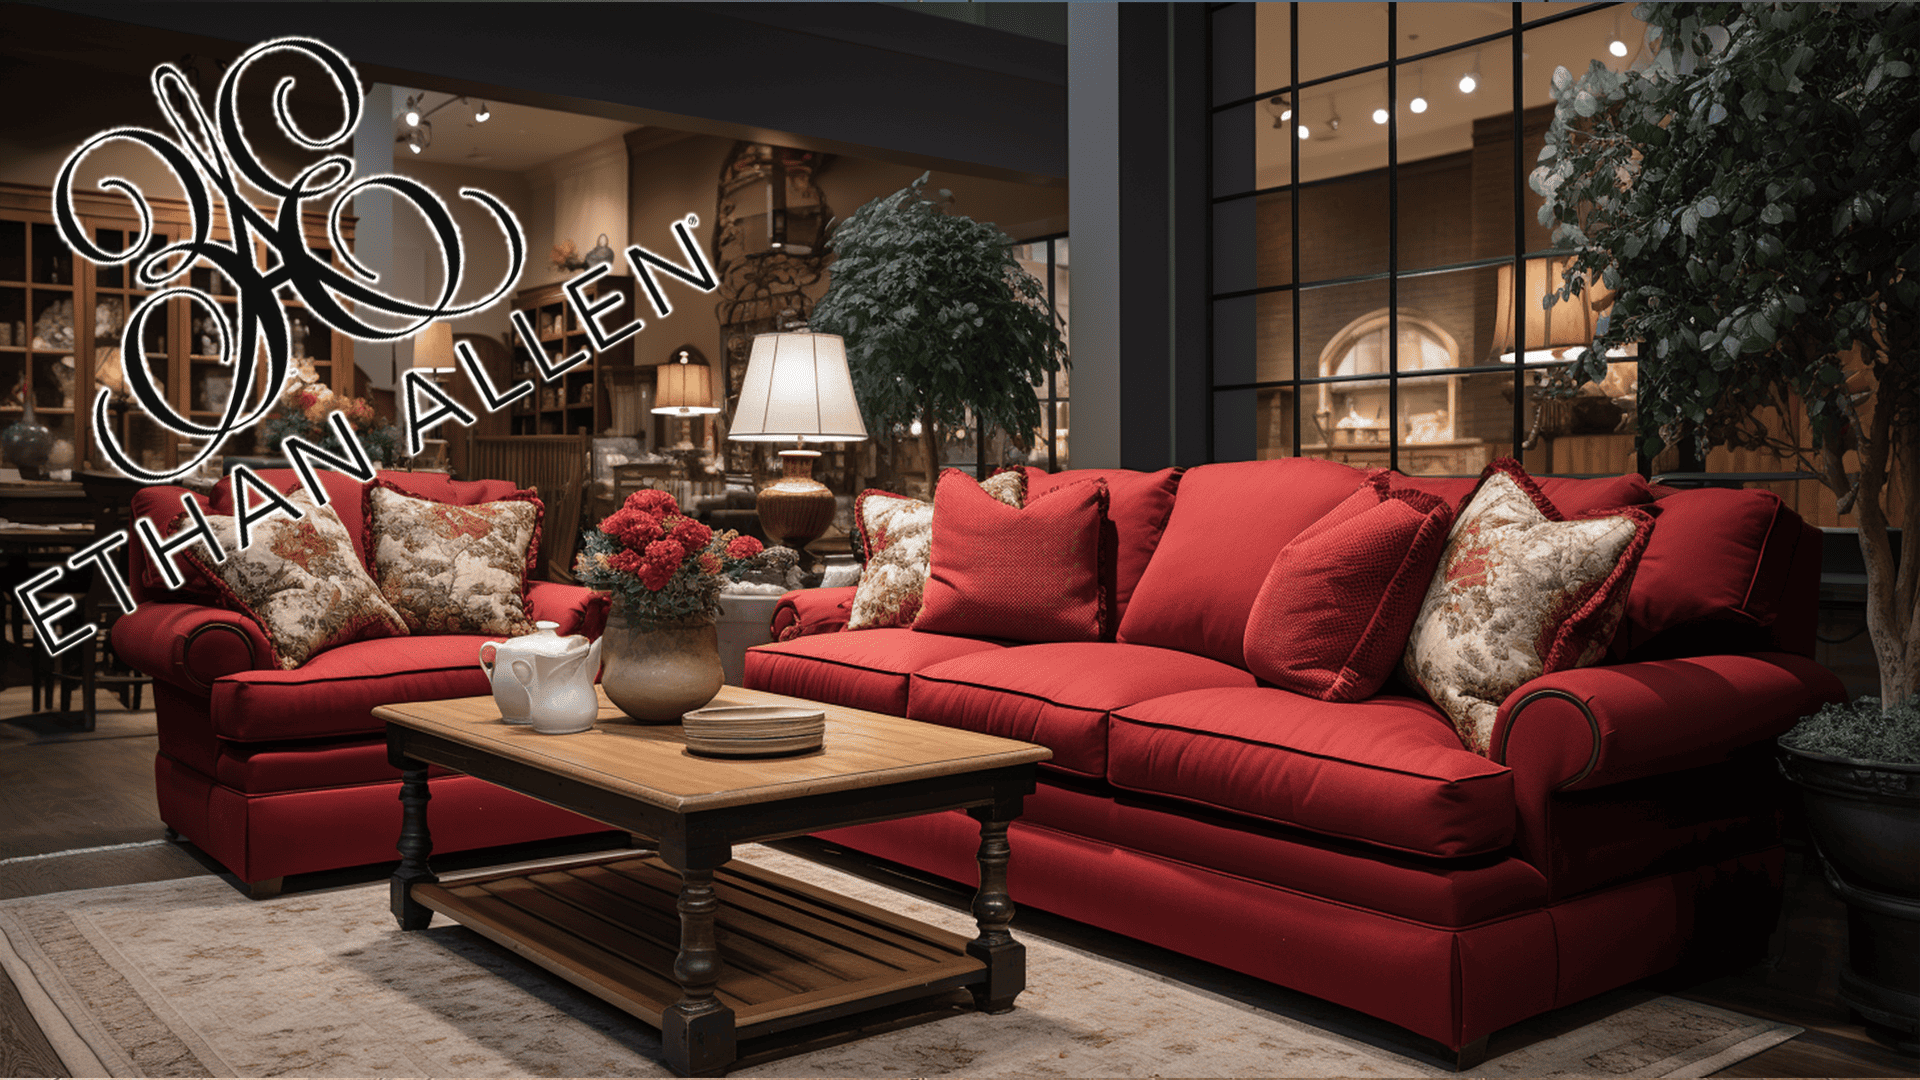 Ethan Allen Couch in retail showroom with Ethan Allen logo